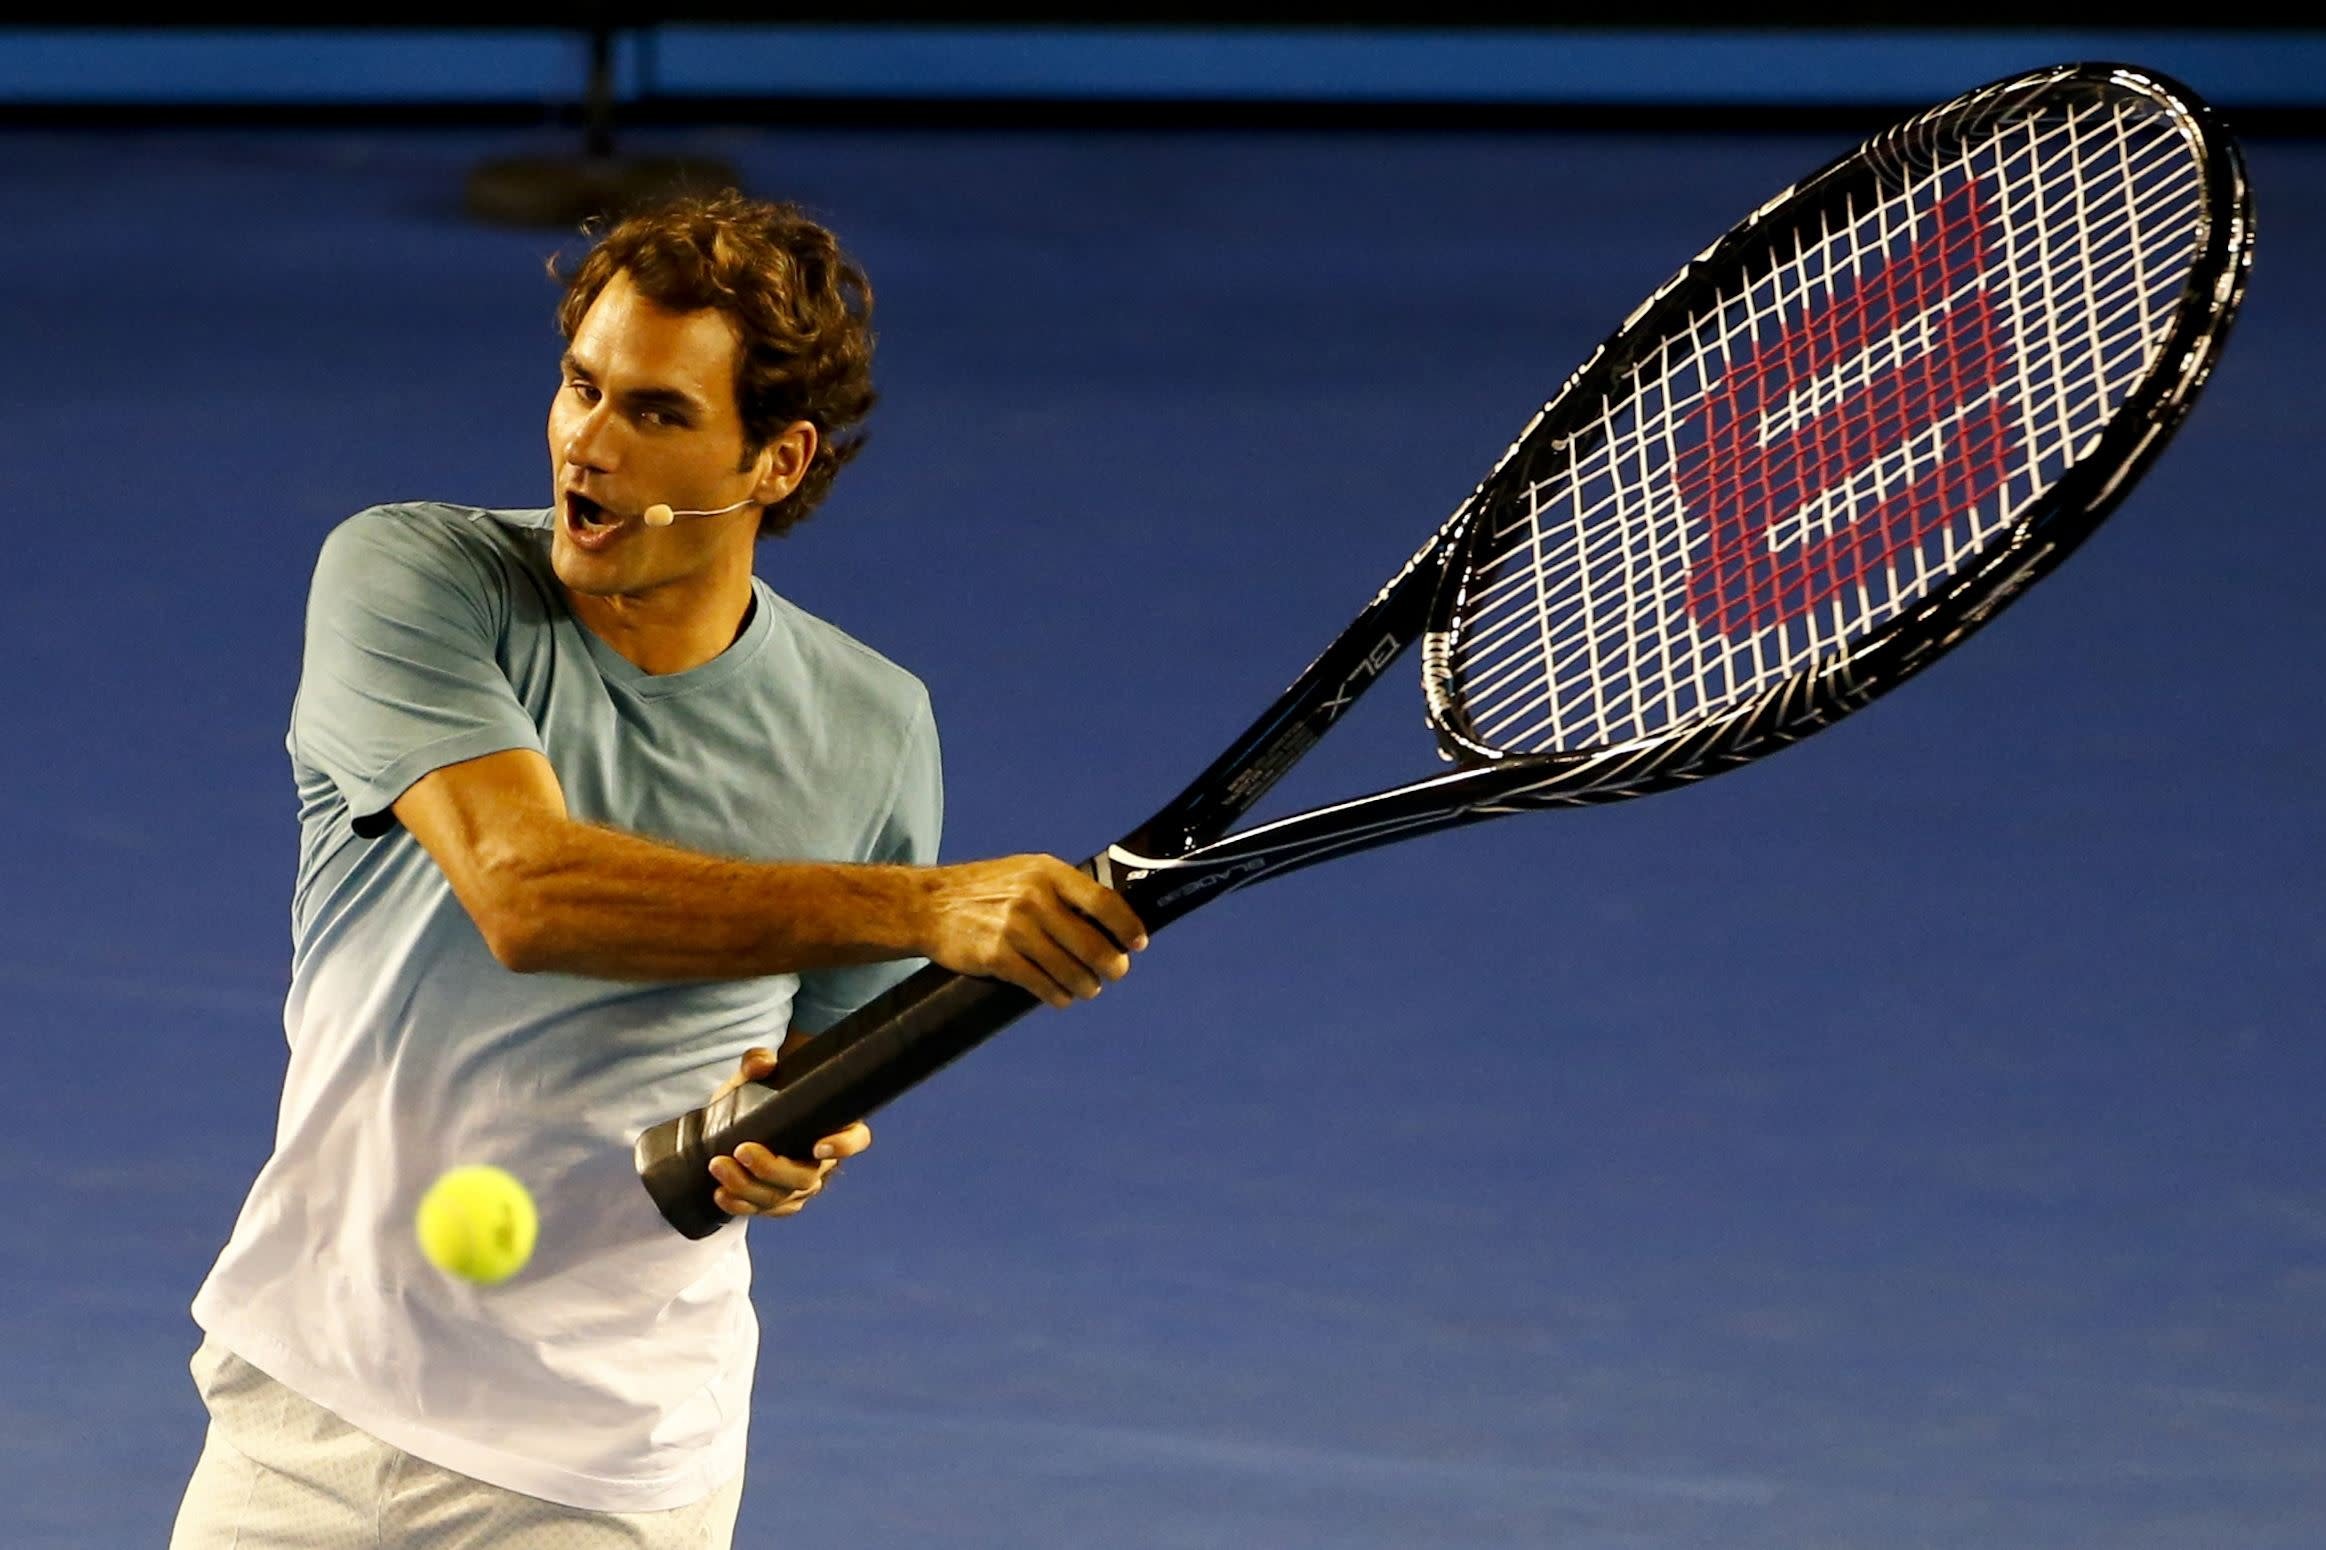 Теннис игра с ракетками. Роджер Федерер с ракеткой. Шелтон теннисист. Гигантские ракетки. Ракетка для большого тенниса.